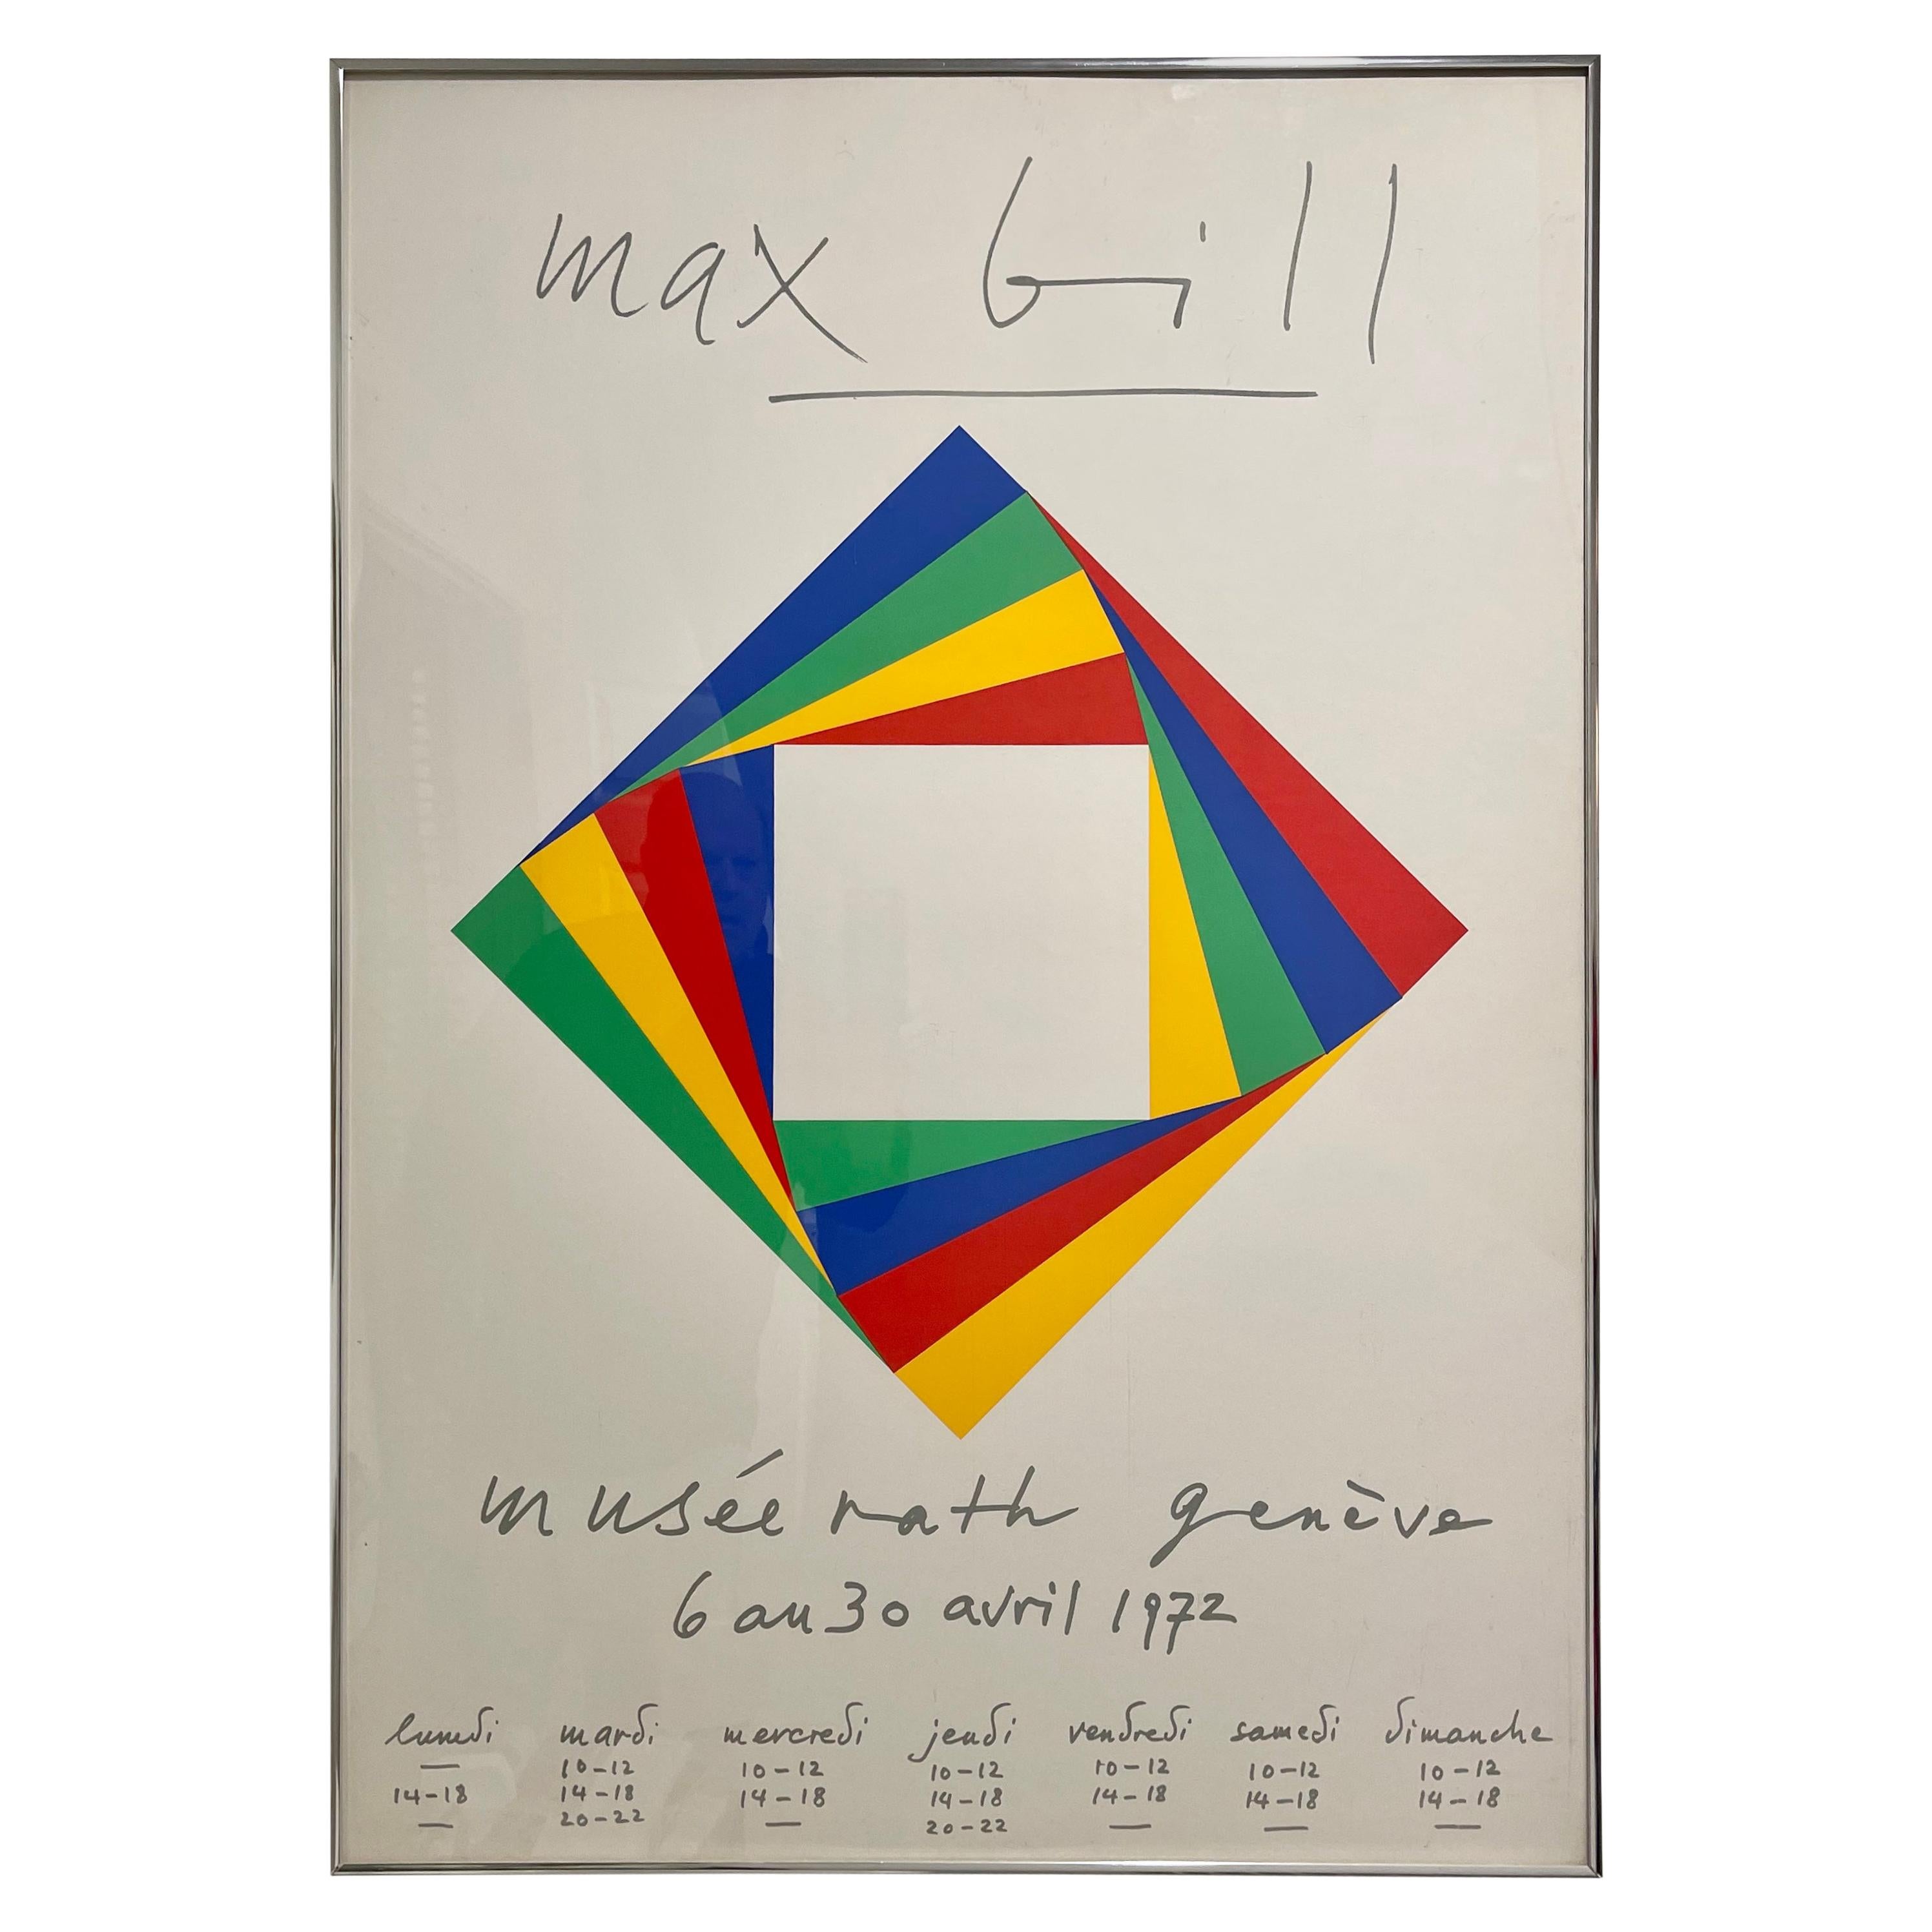 Max Bill Geneve Musee Serigraph, 1972